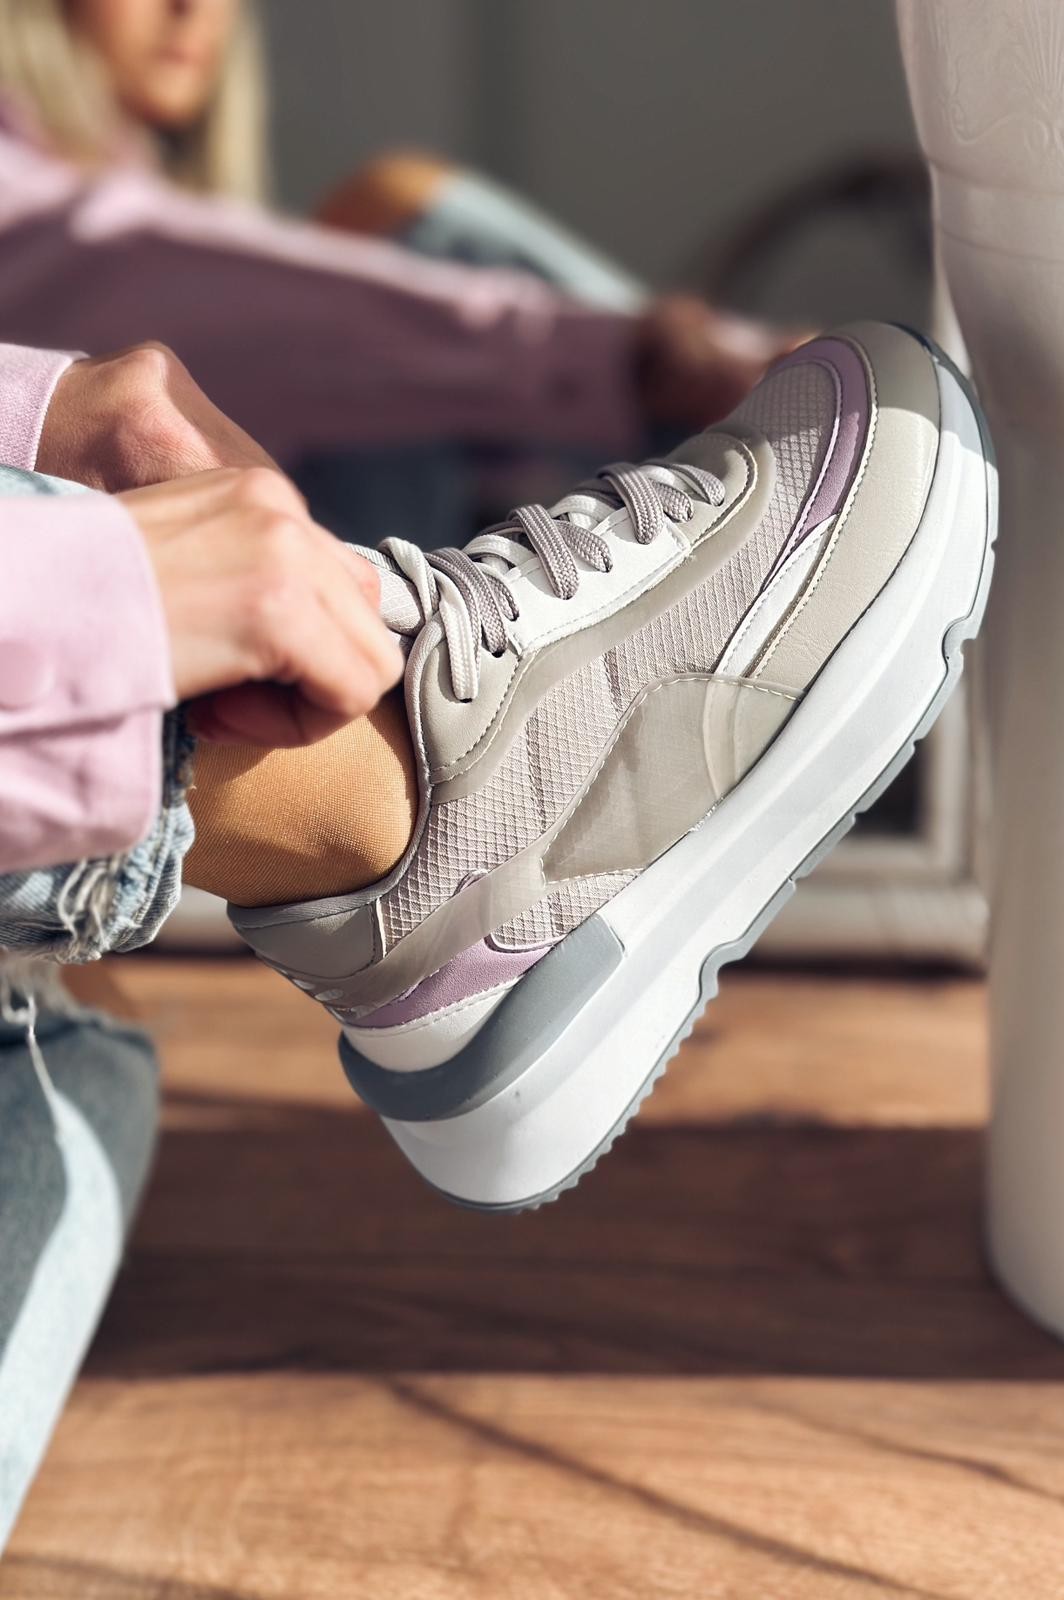 Casina women's sneakers gray